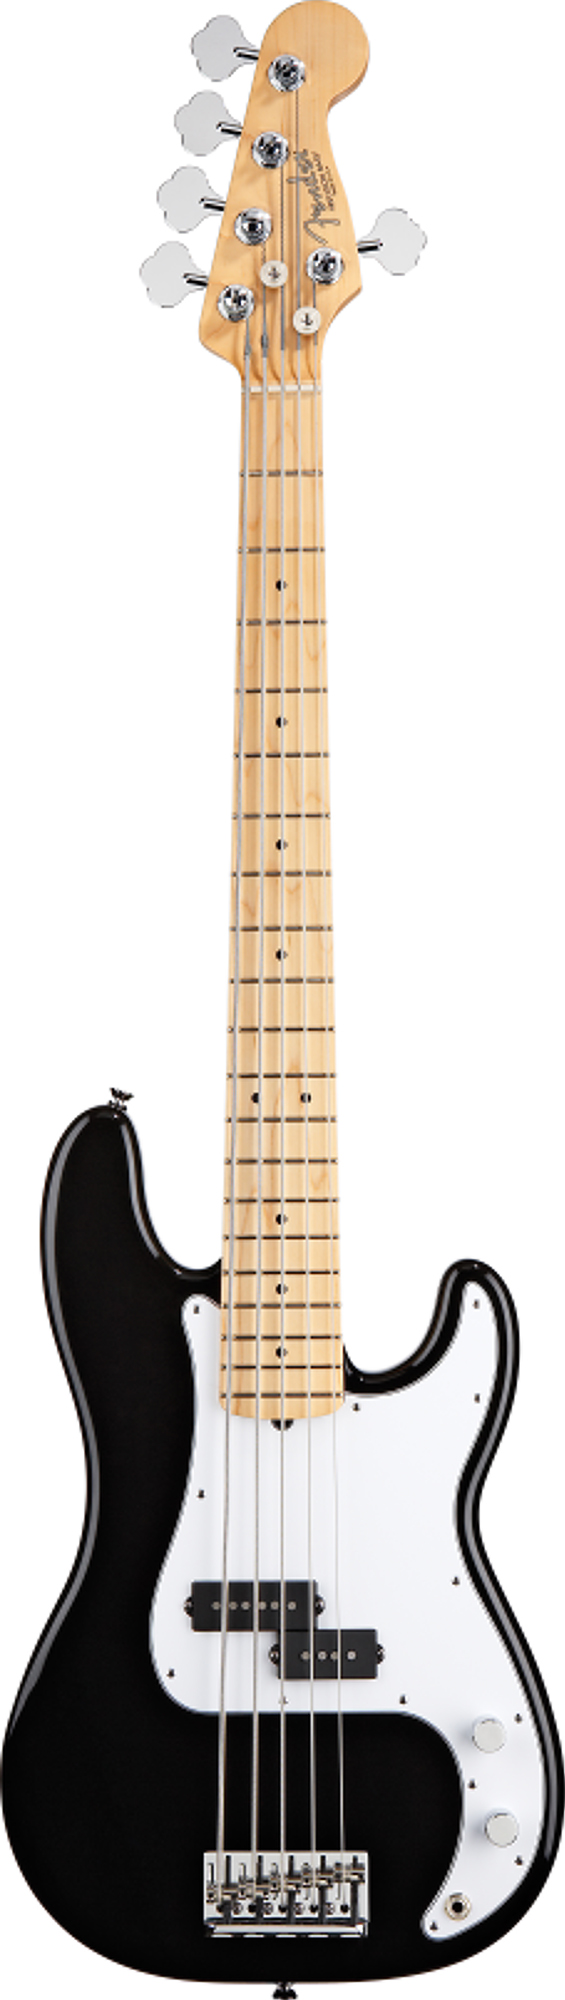 American Standard Precision Bass V